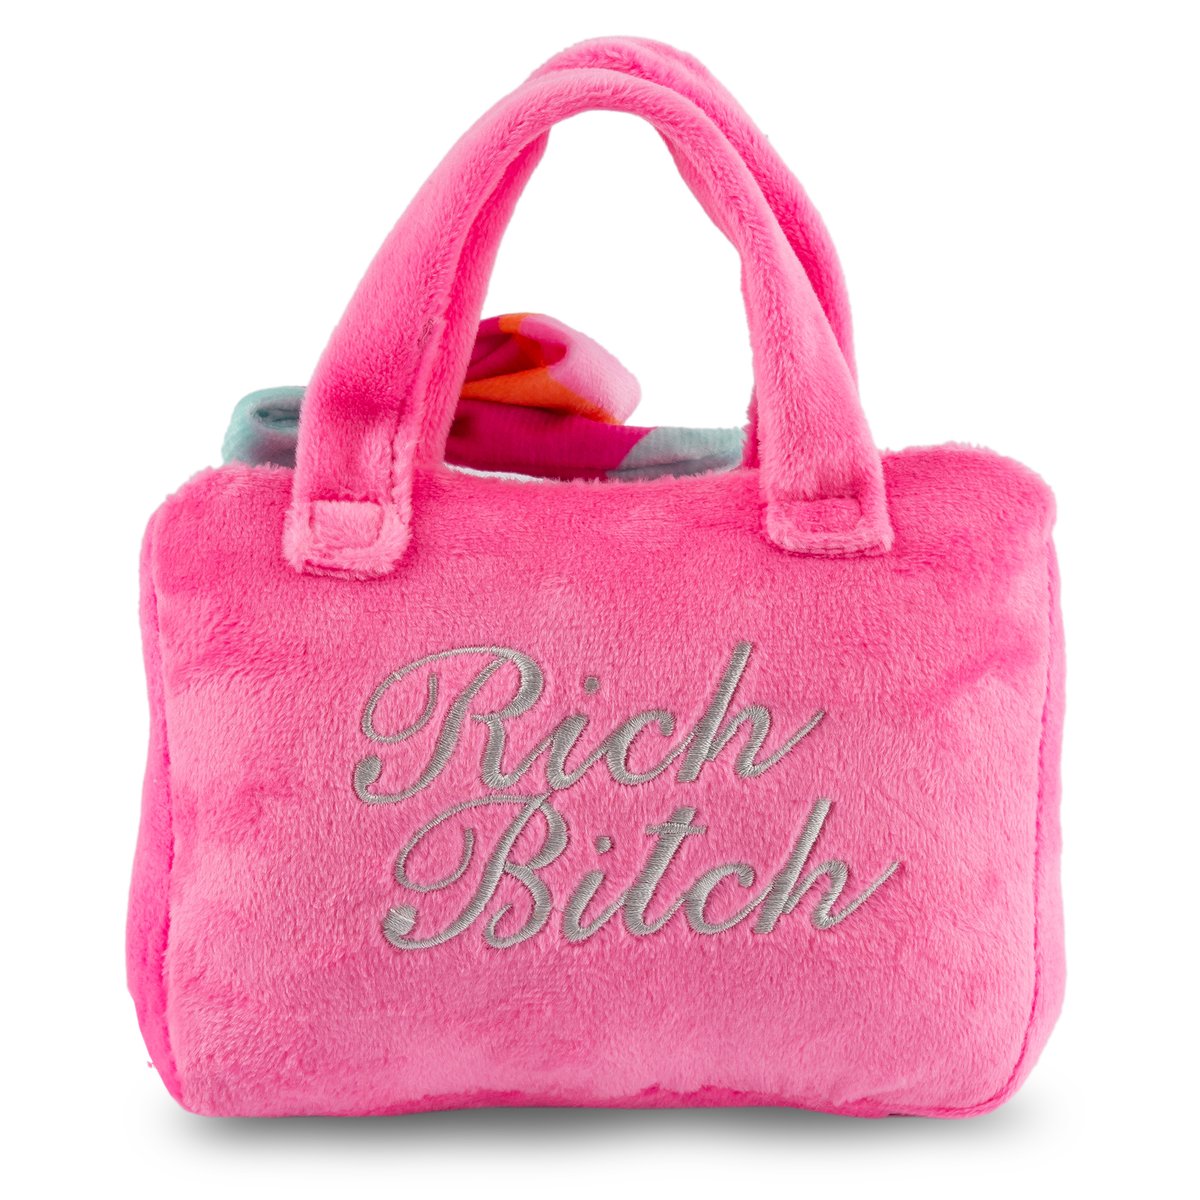 Haute Diggity Dog - Barkin Bag (Rich Bitch) - Pink w/ Scarf